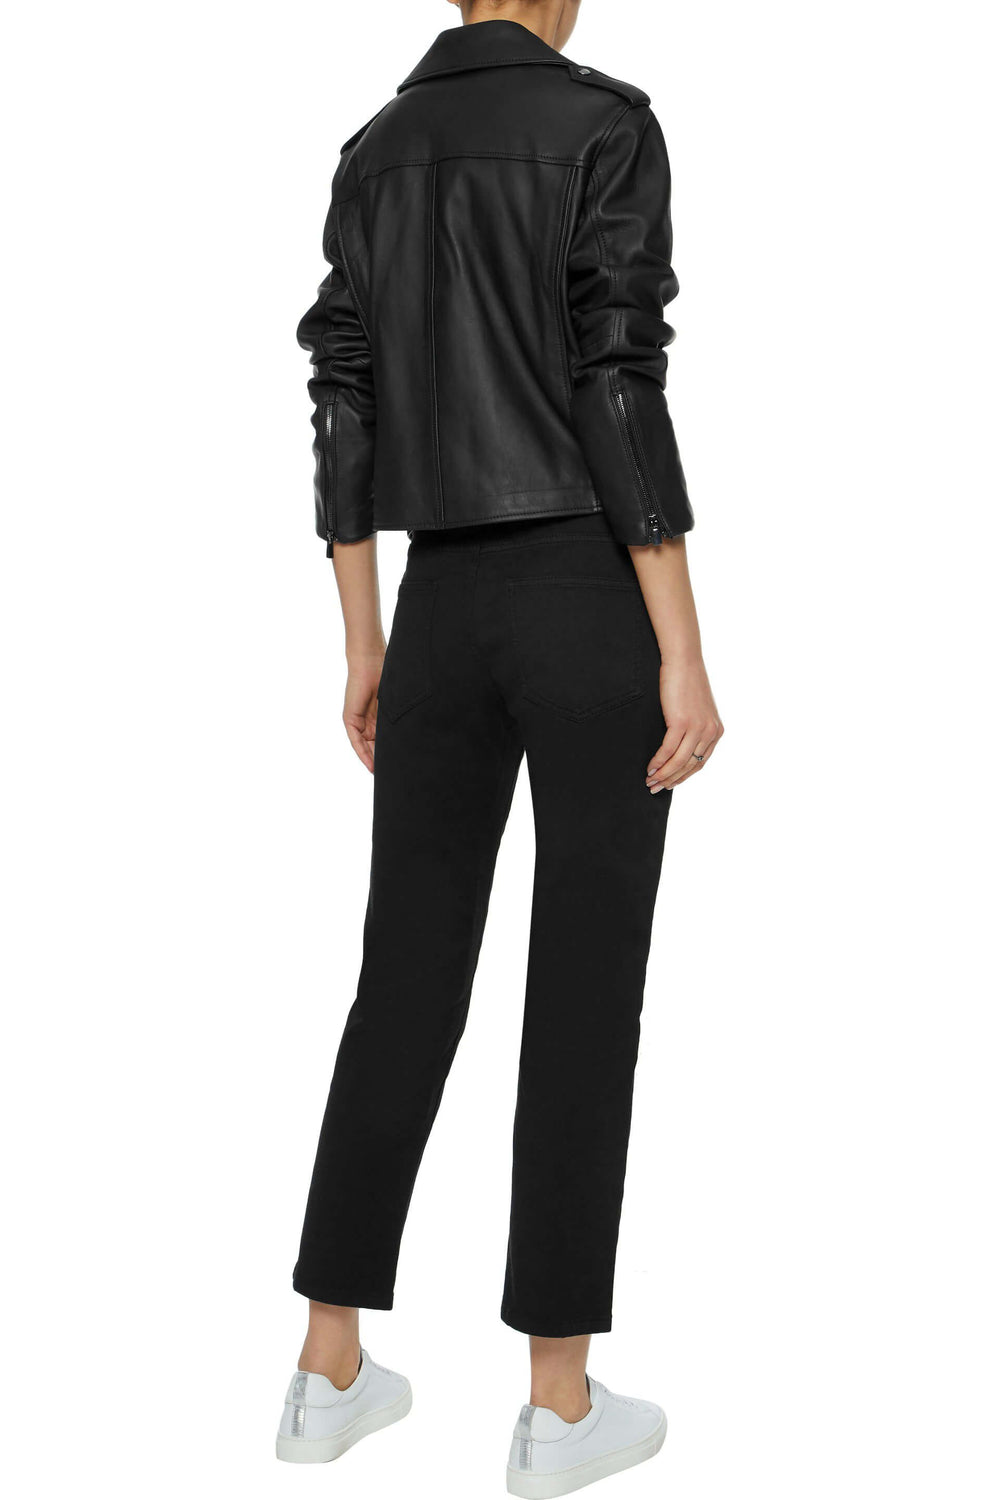 Online Black Leather Jacket For Women